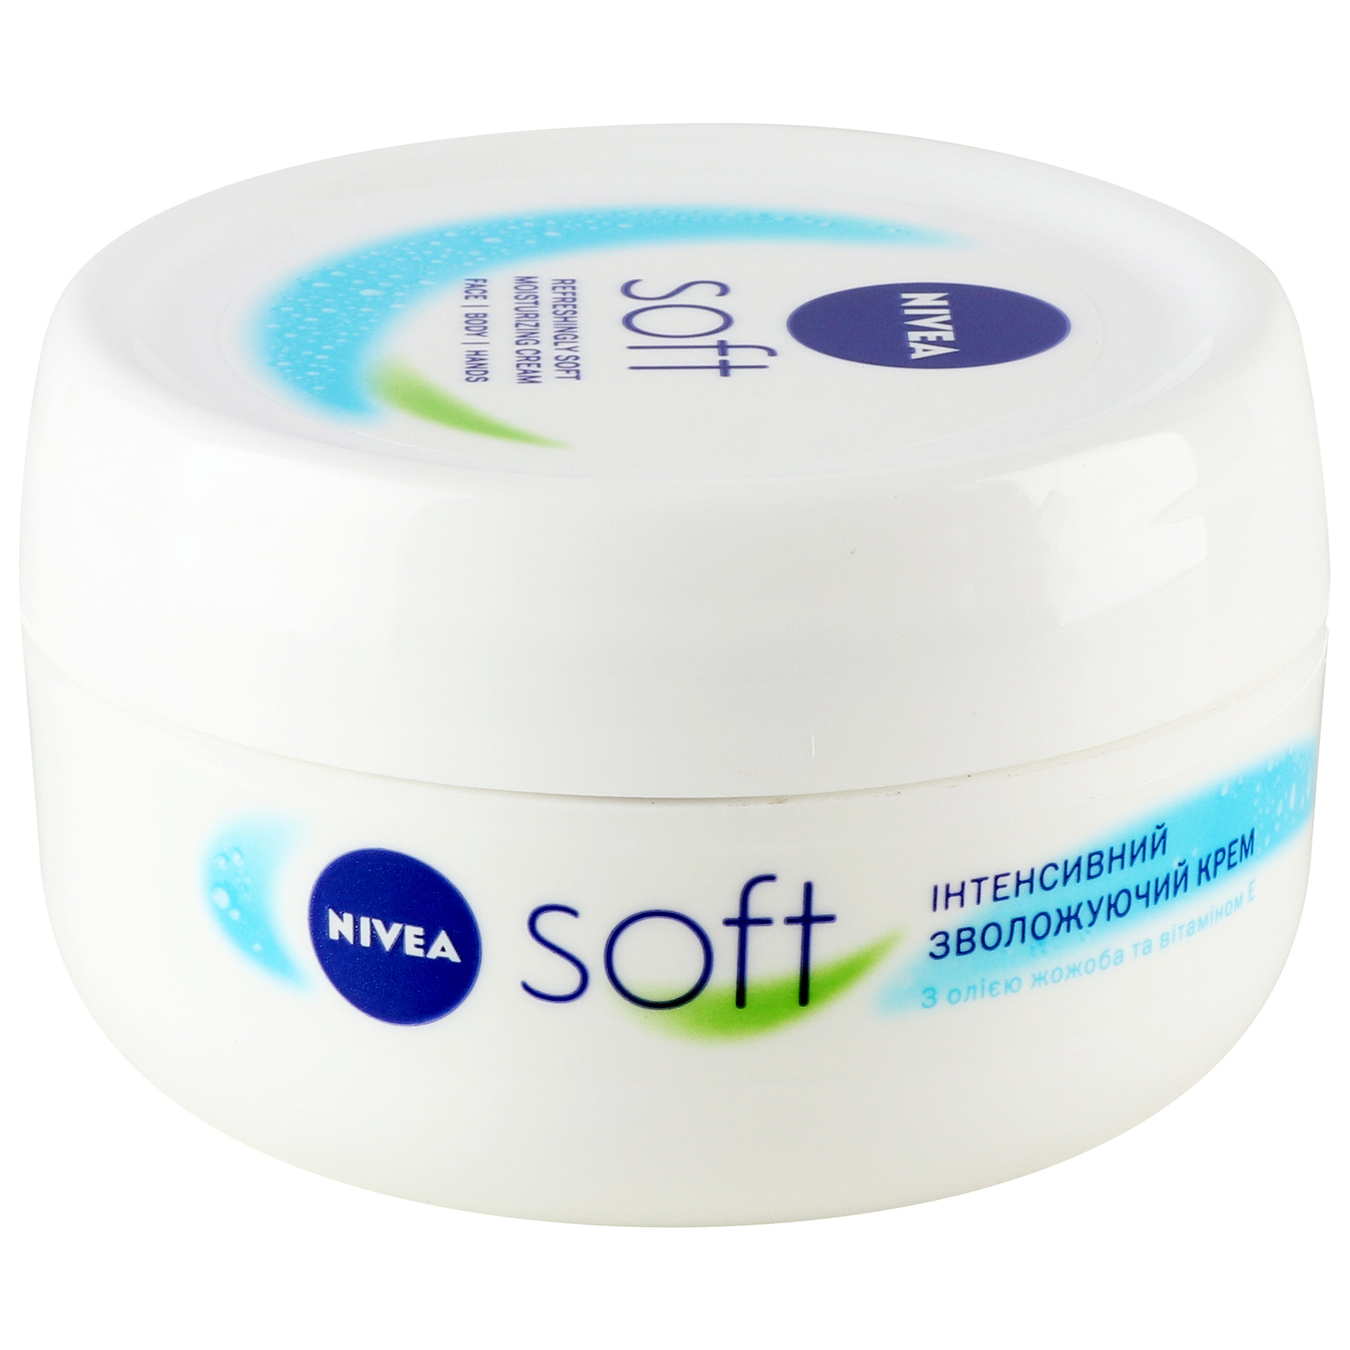 Nivea Soft Wear Intensive body cream with Jojoba Oil 100ml 3